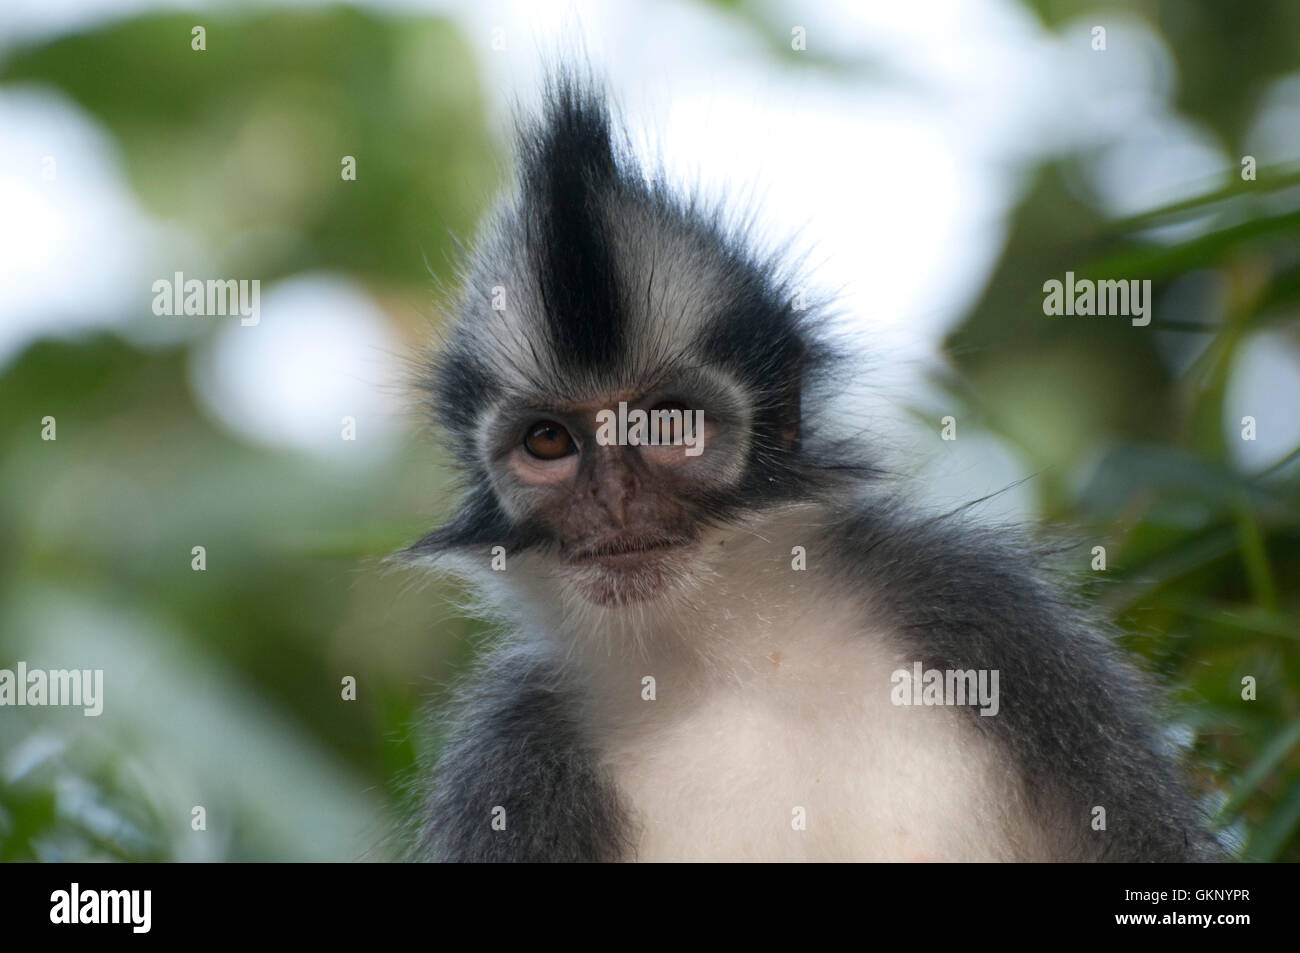 Thomas foglia della scimmia (Presbytis thomasi) in Bukit Lawang, Sumatra Foto Stock